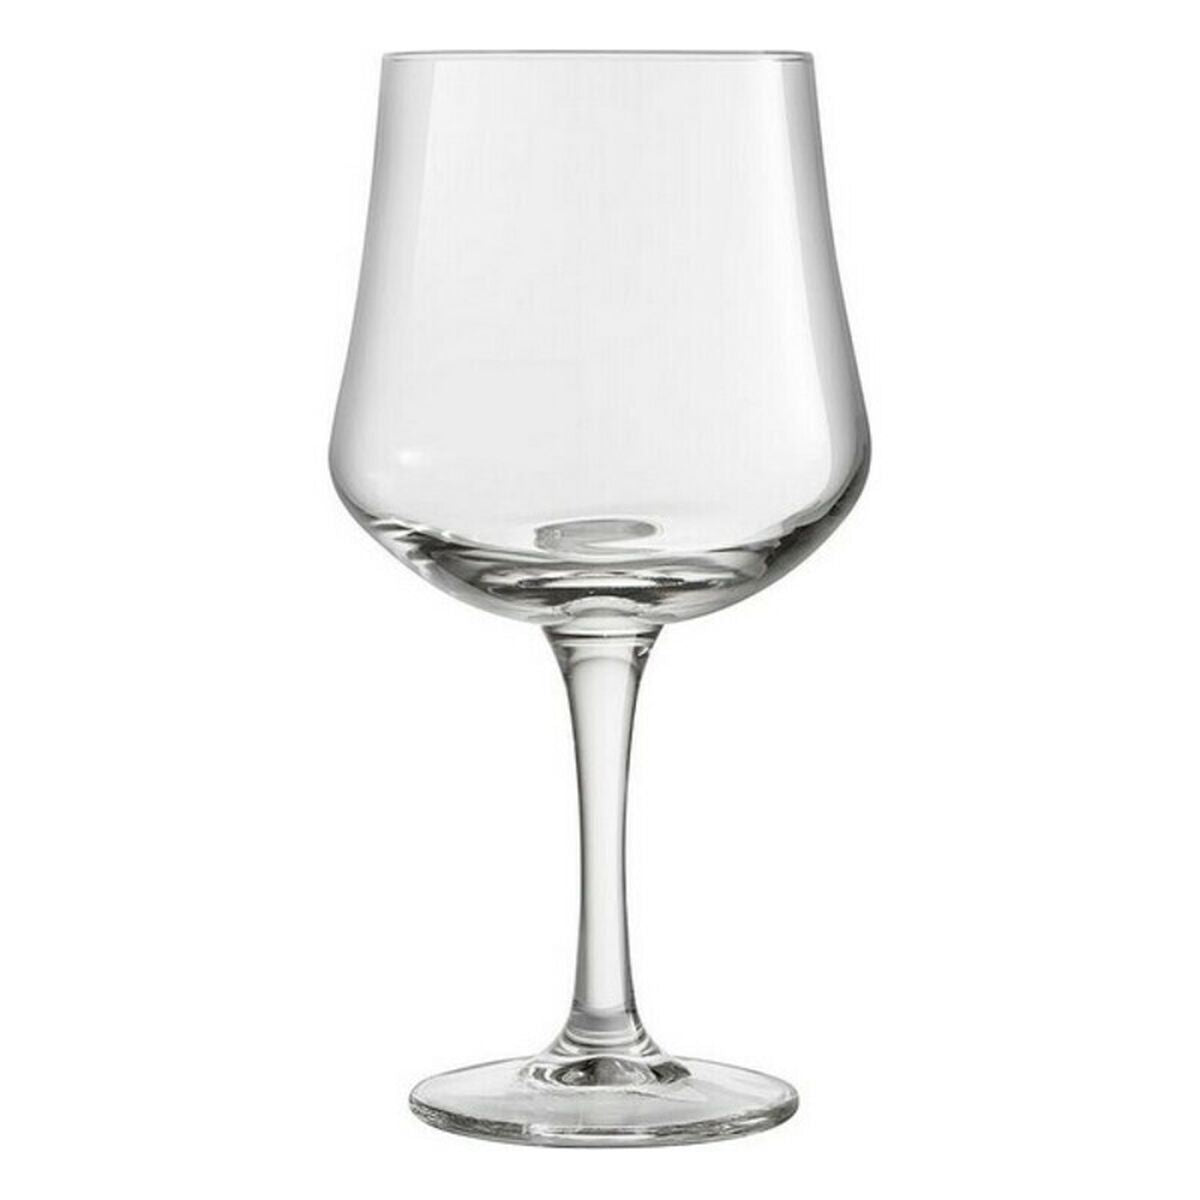 Cocktailglas Arome 67 cl